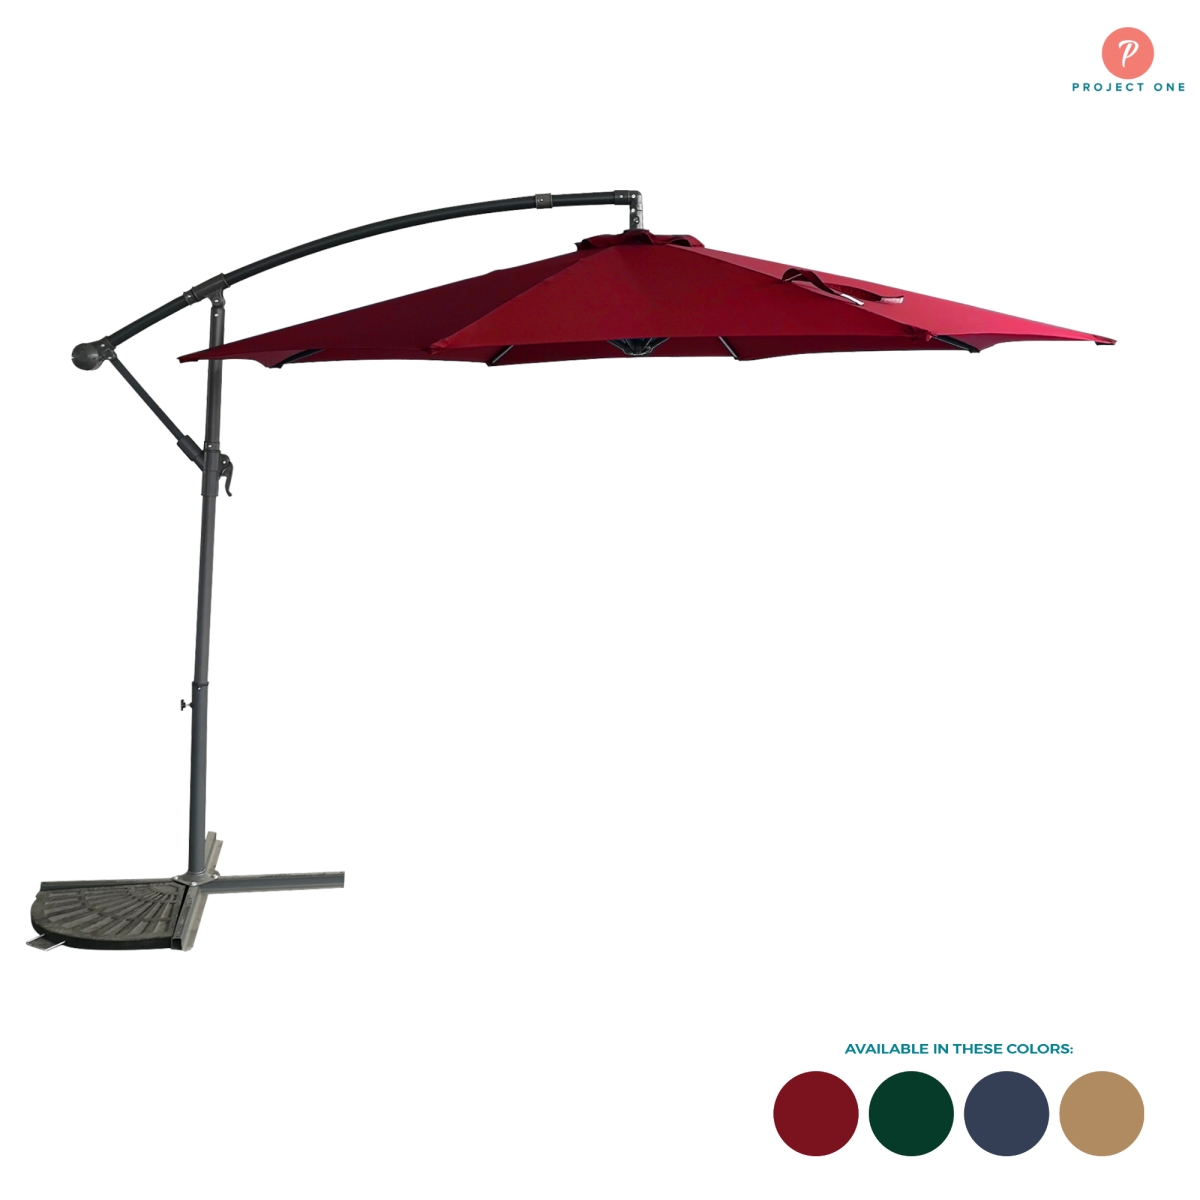 El-1001-red 10 Ft. Patio Offset Cantilever Outdoor Umbrella, Red